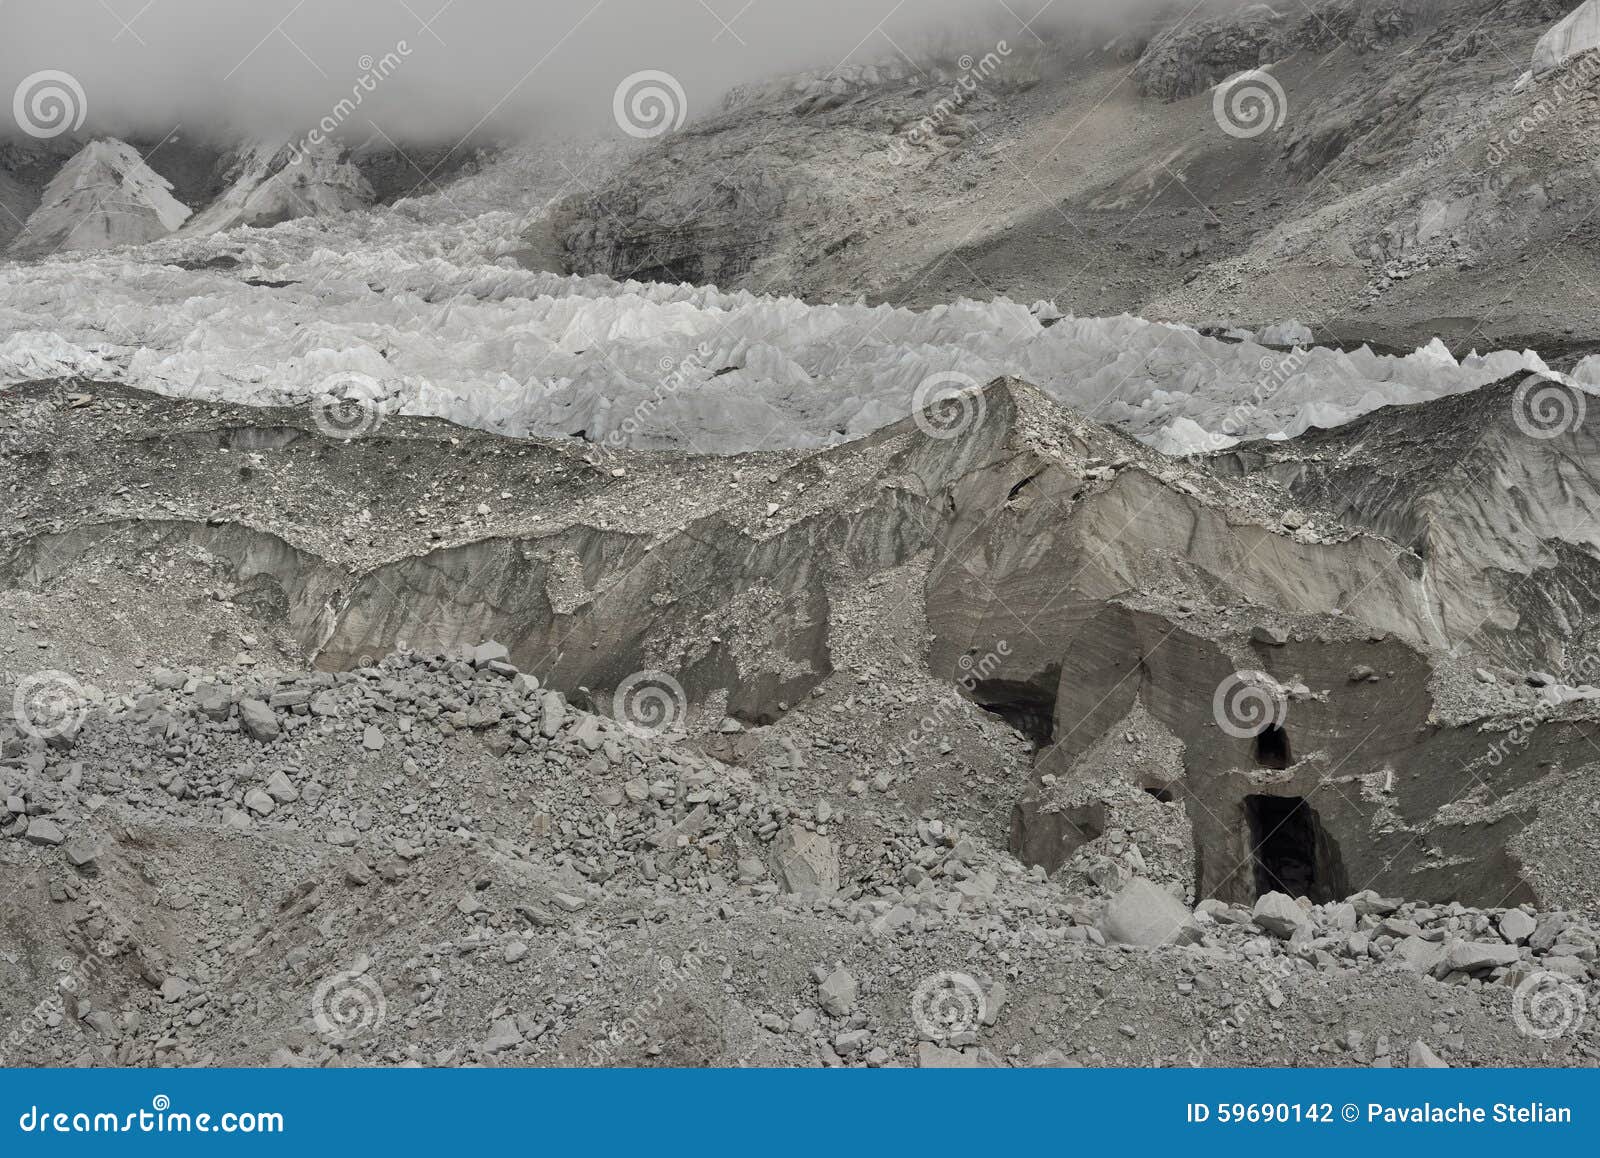 khumbu glacier near the famous and dangerous khumbu icefall, himalaya. nepal